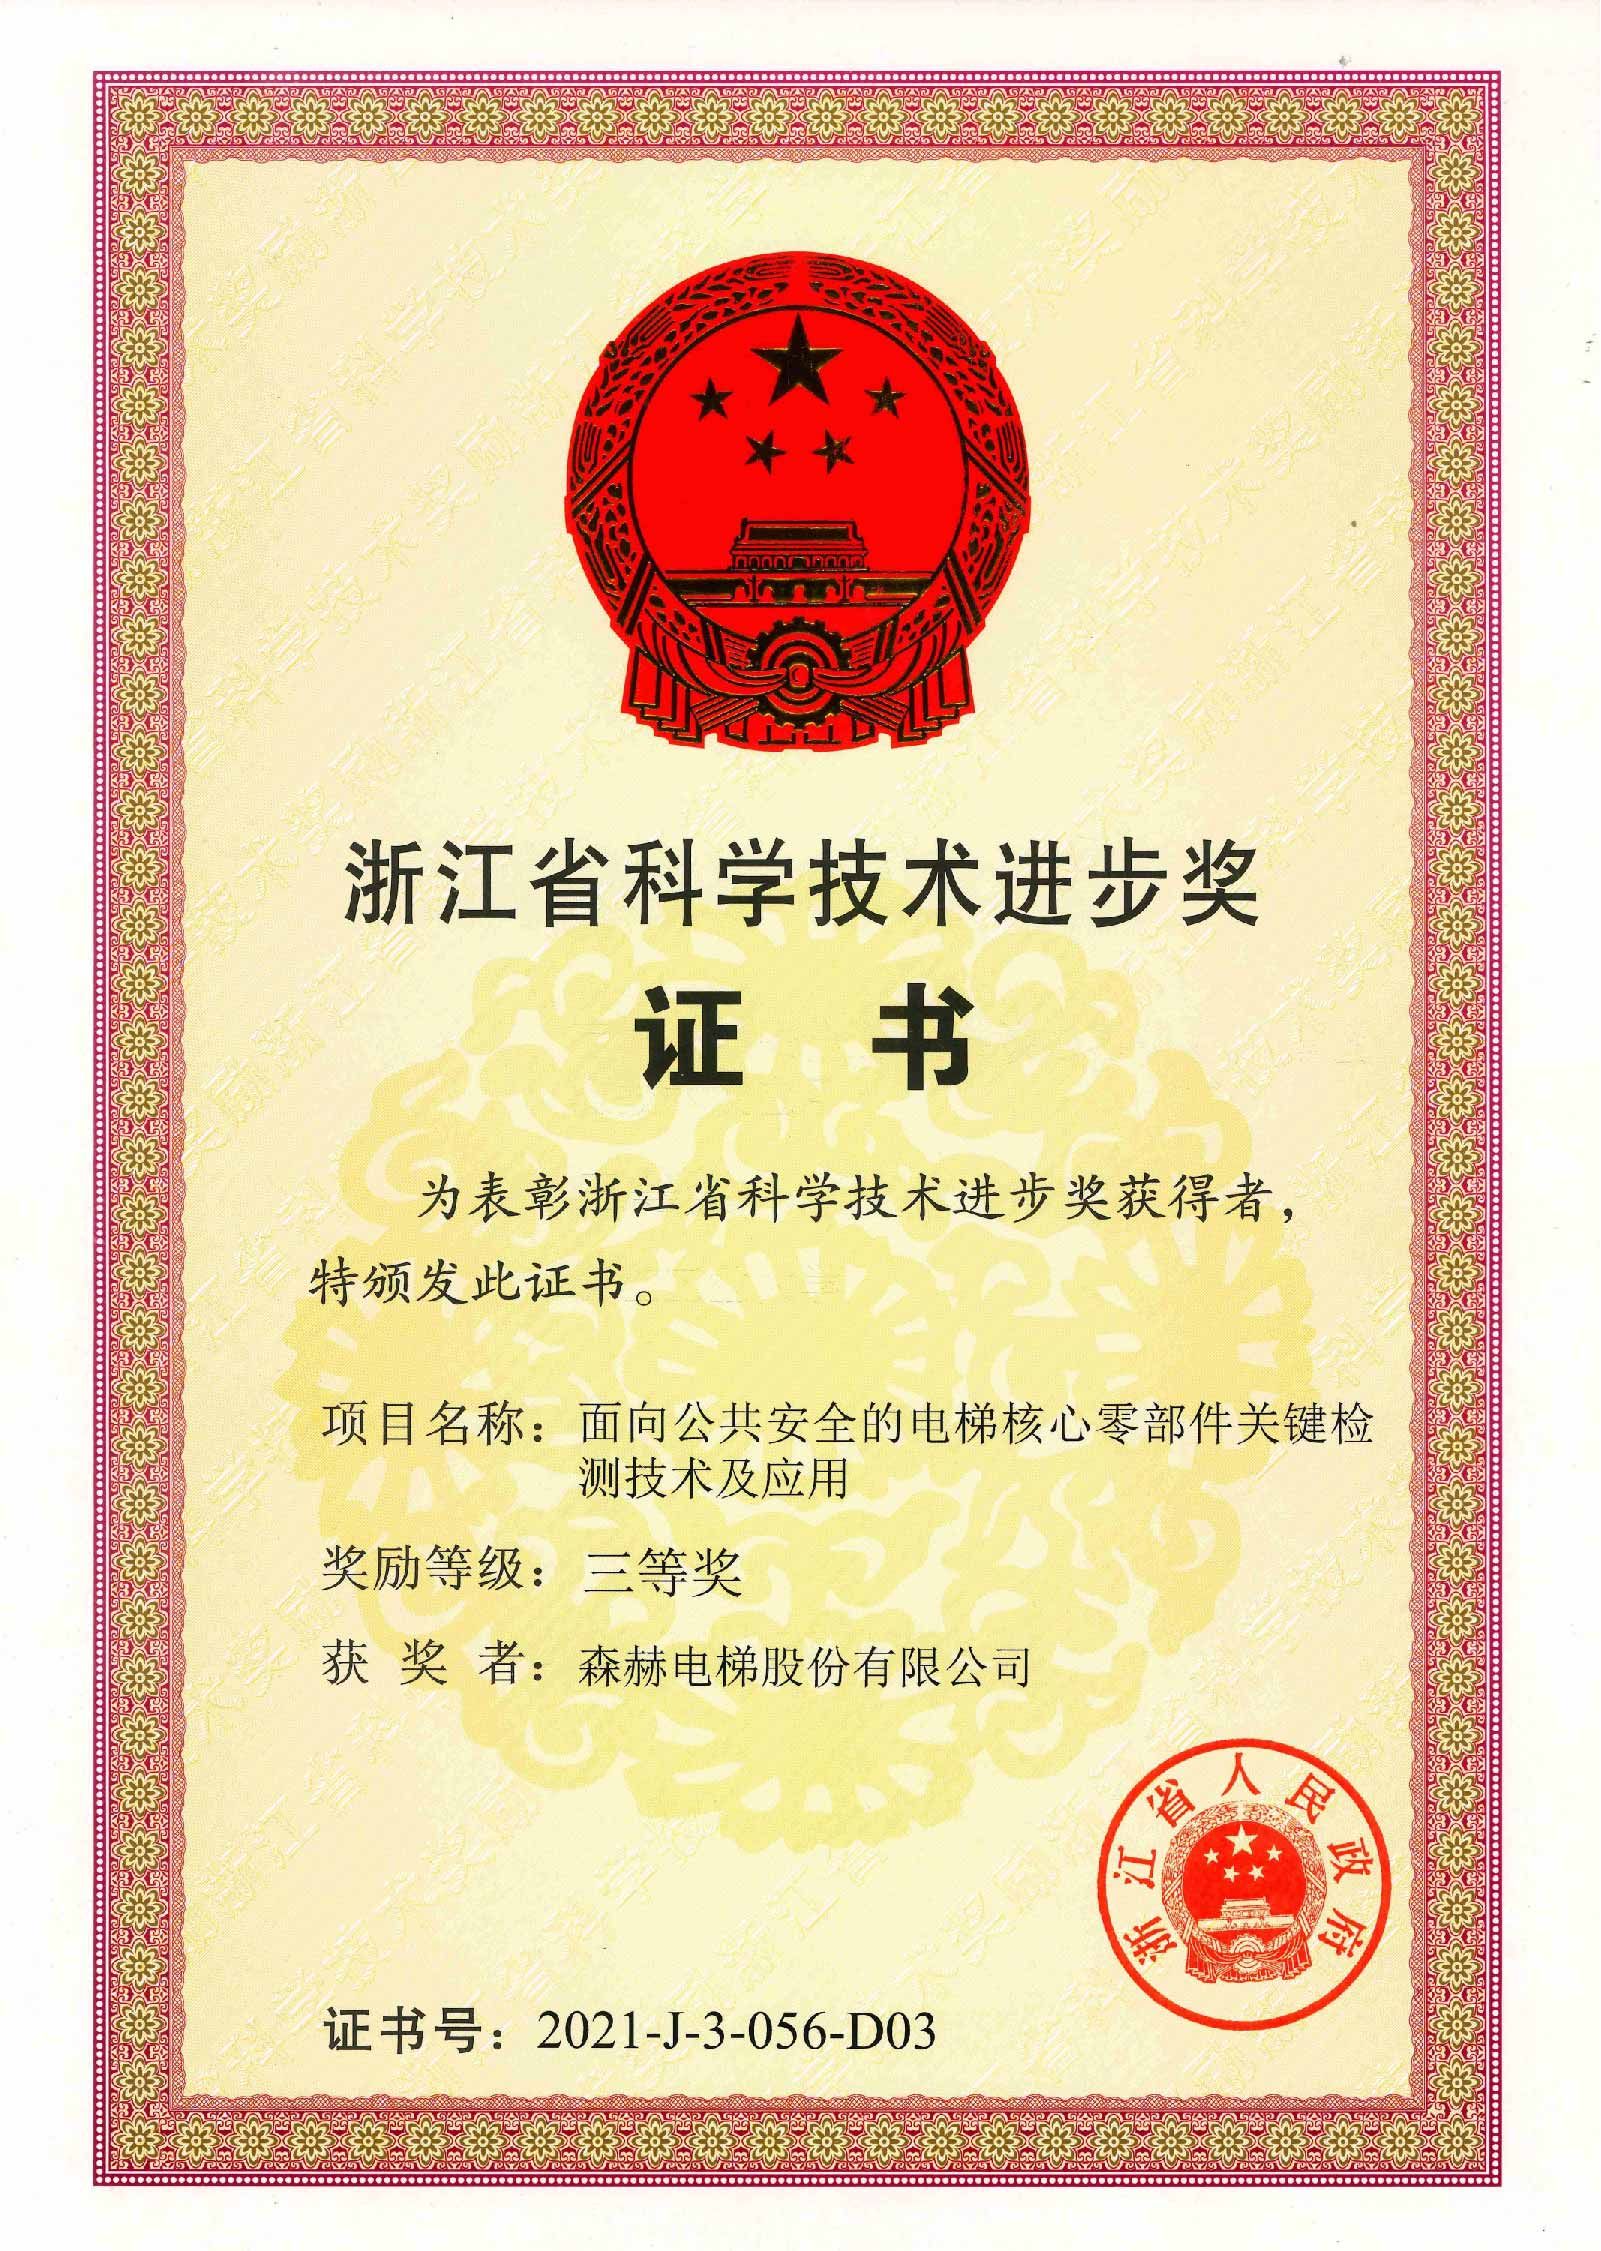 Sicher Elevator Won the Zhejiang Science and Technology Progress Award